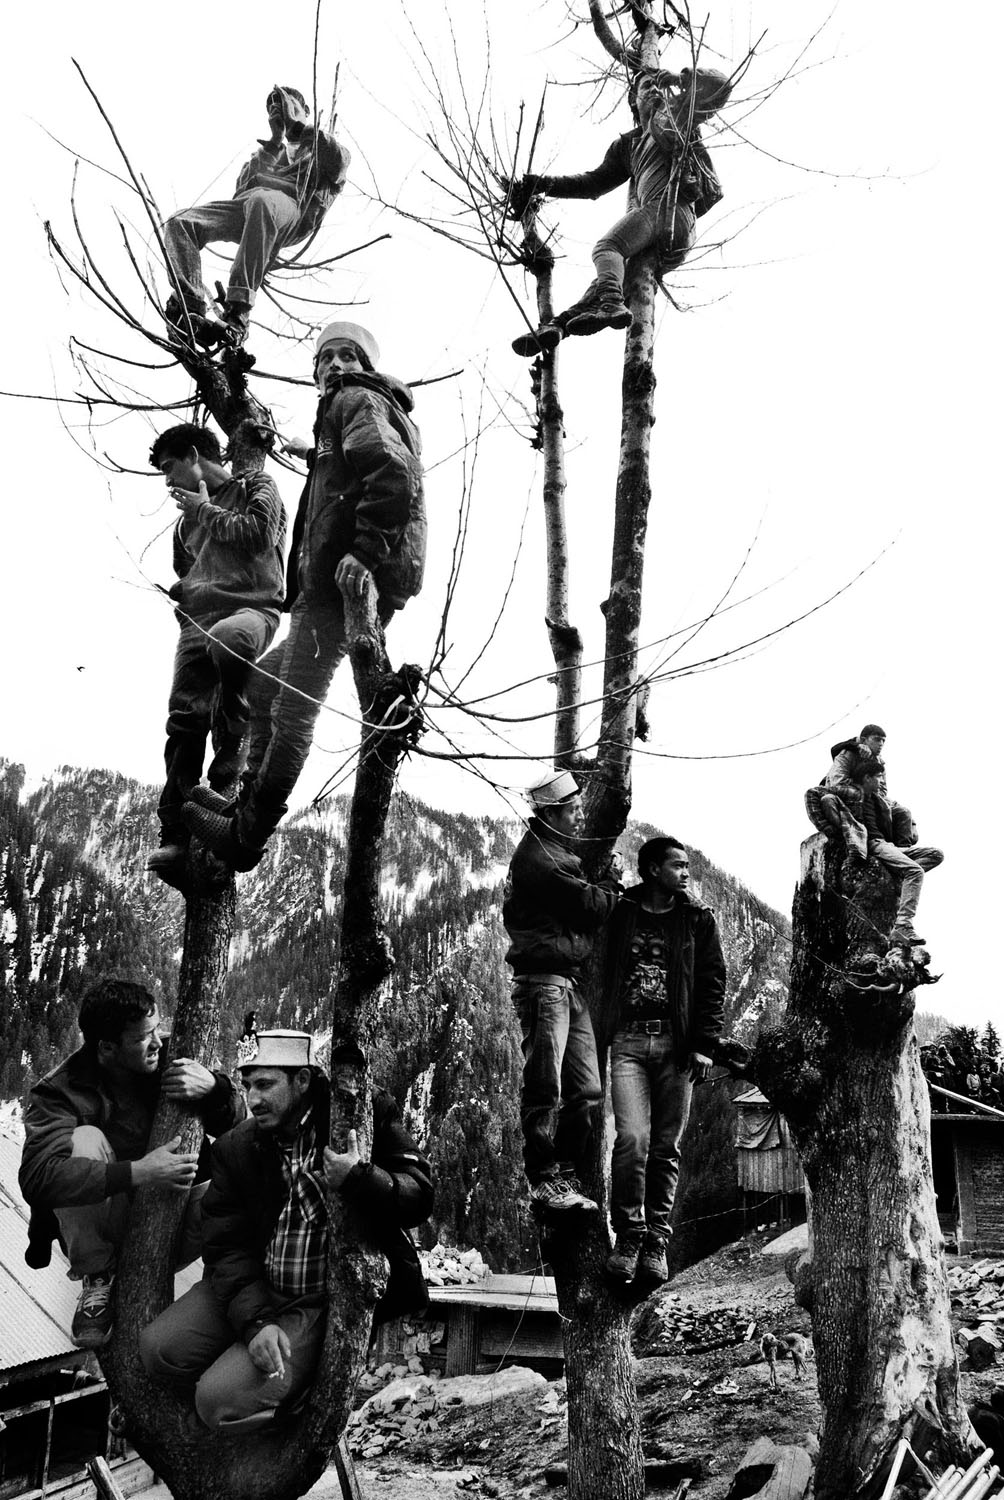 Sekelompok laki-laki memanjat batang pohon yang tidak berdaun